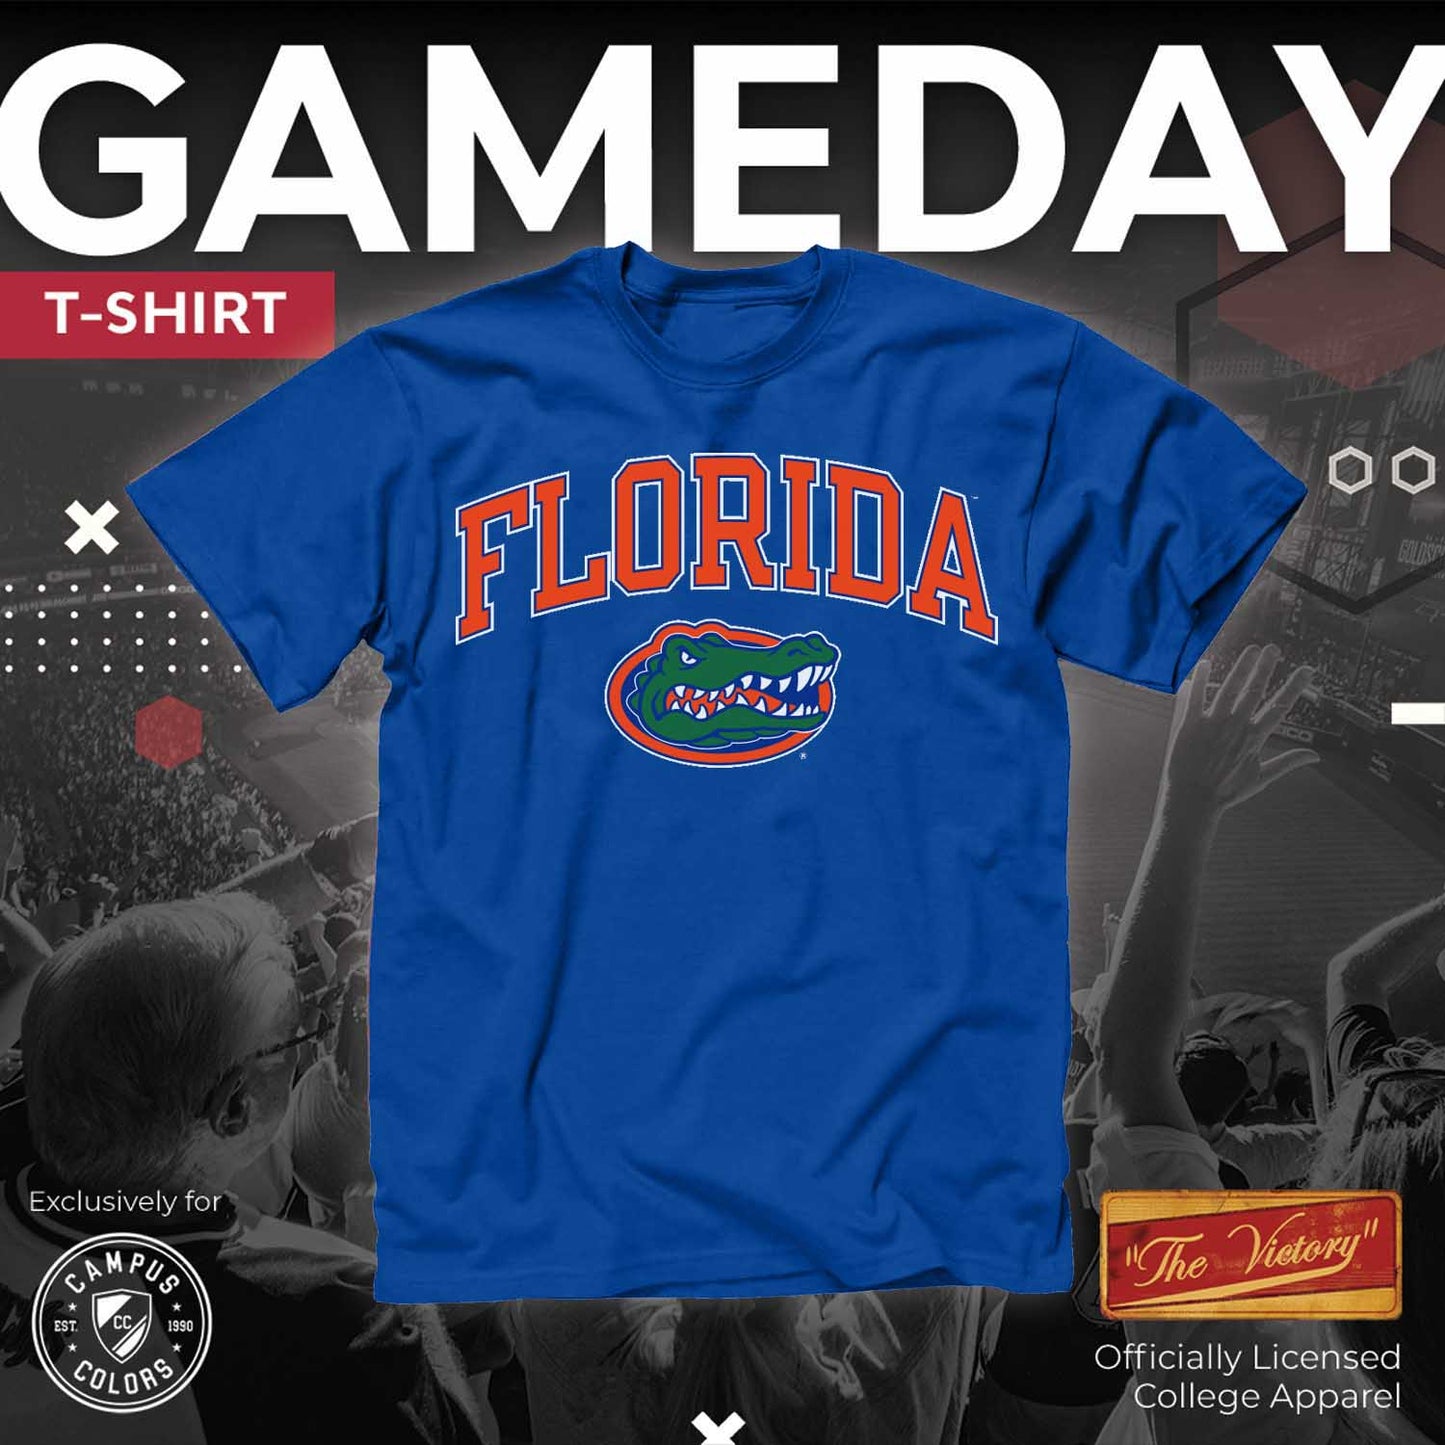 Florida Gators NCAA Adult Gameday Cotton T-Shirt - Royal